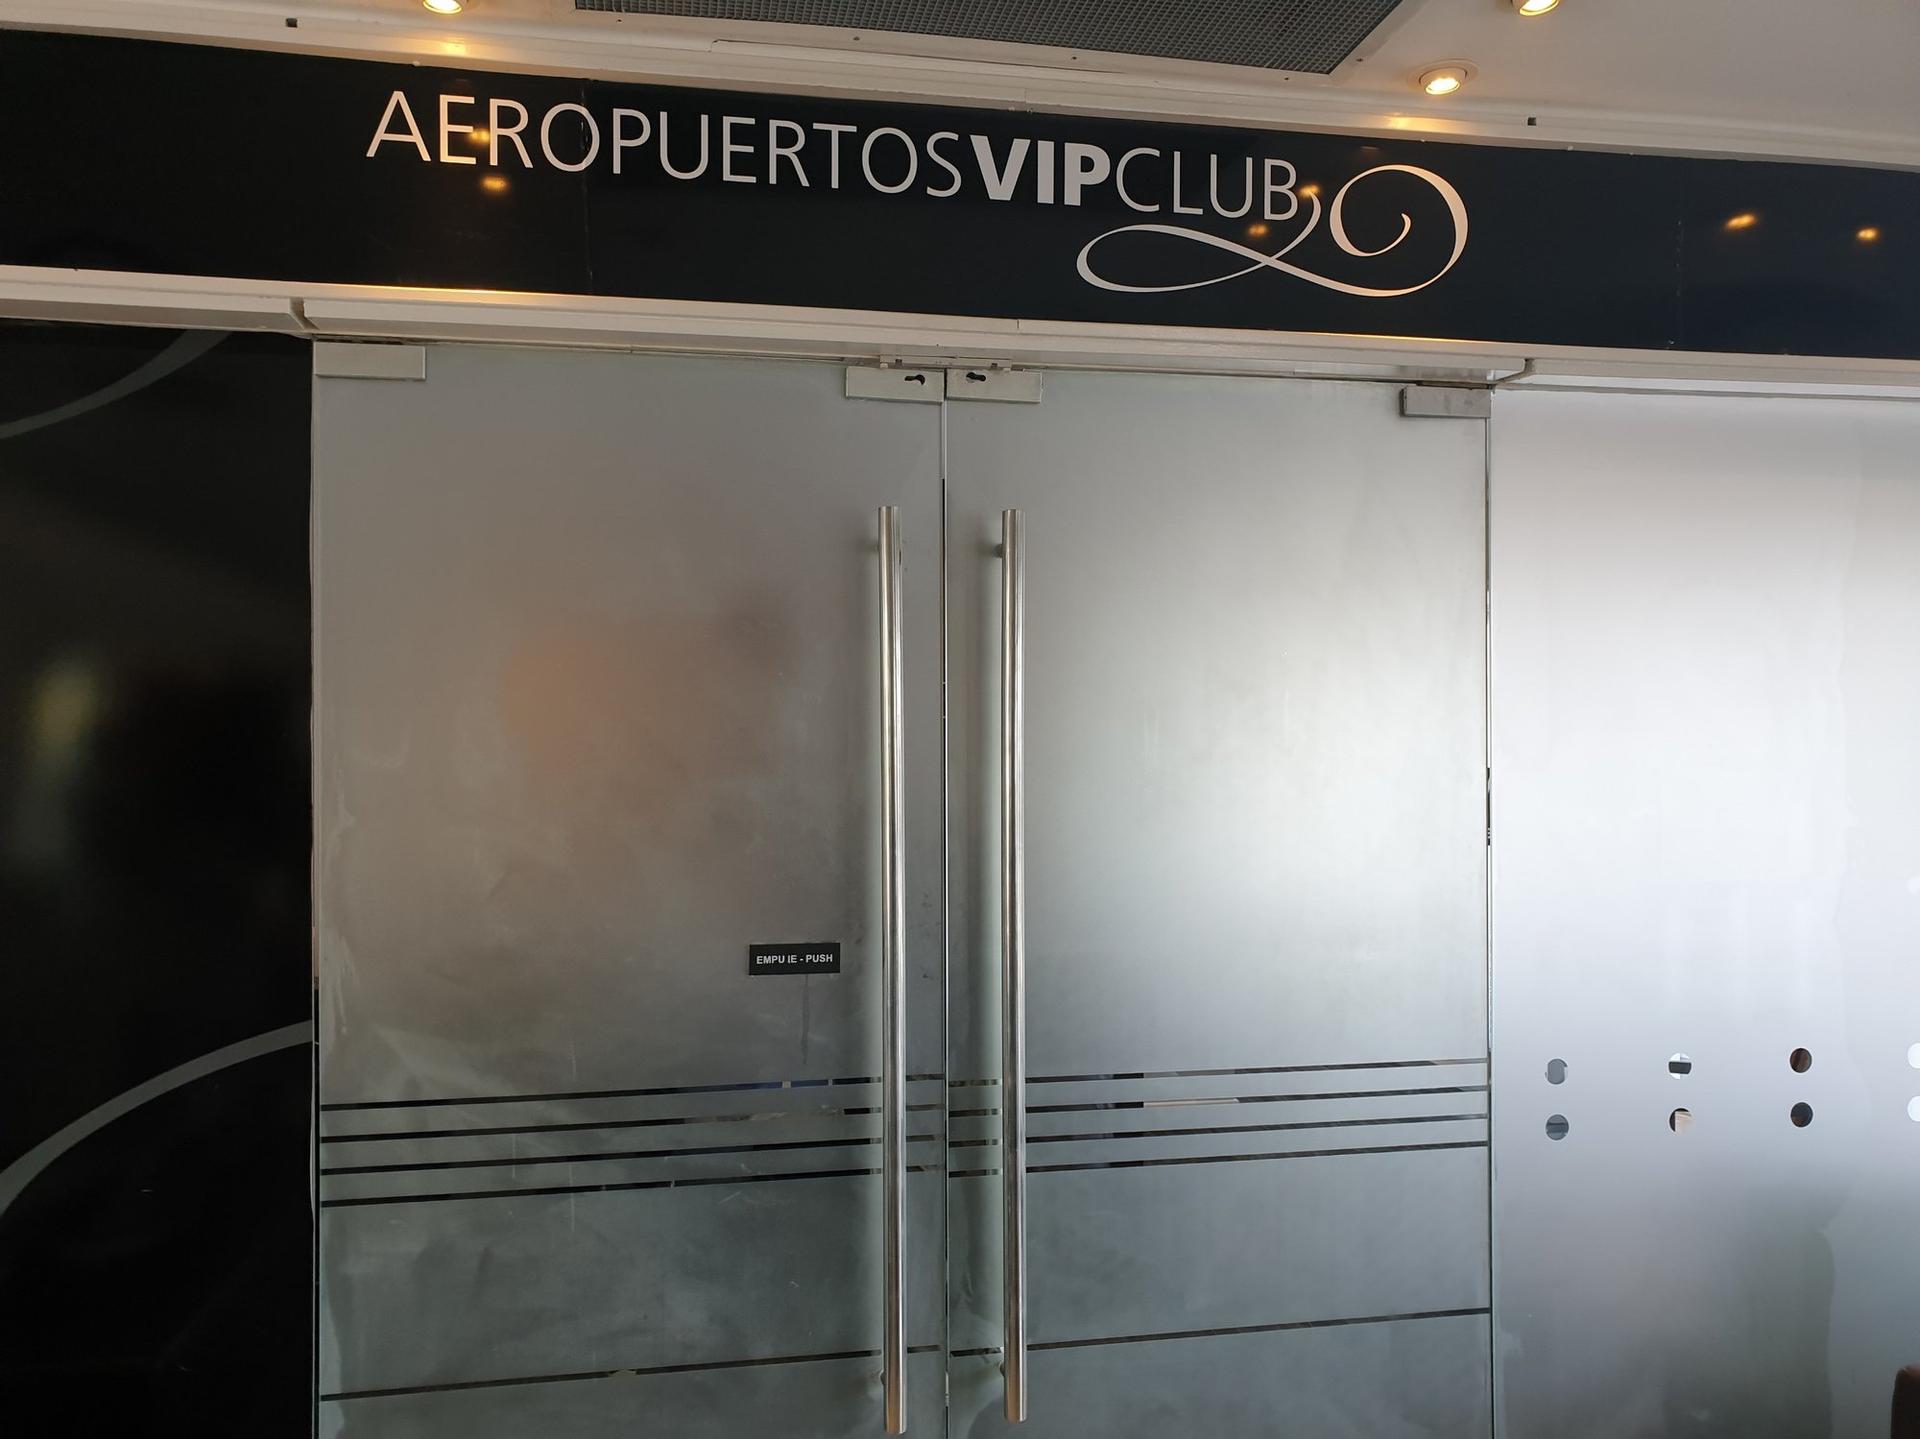 Aeropuertos VIP Club image 11 of 30